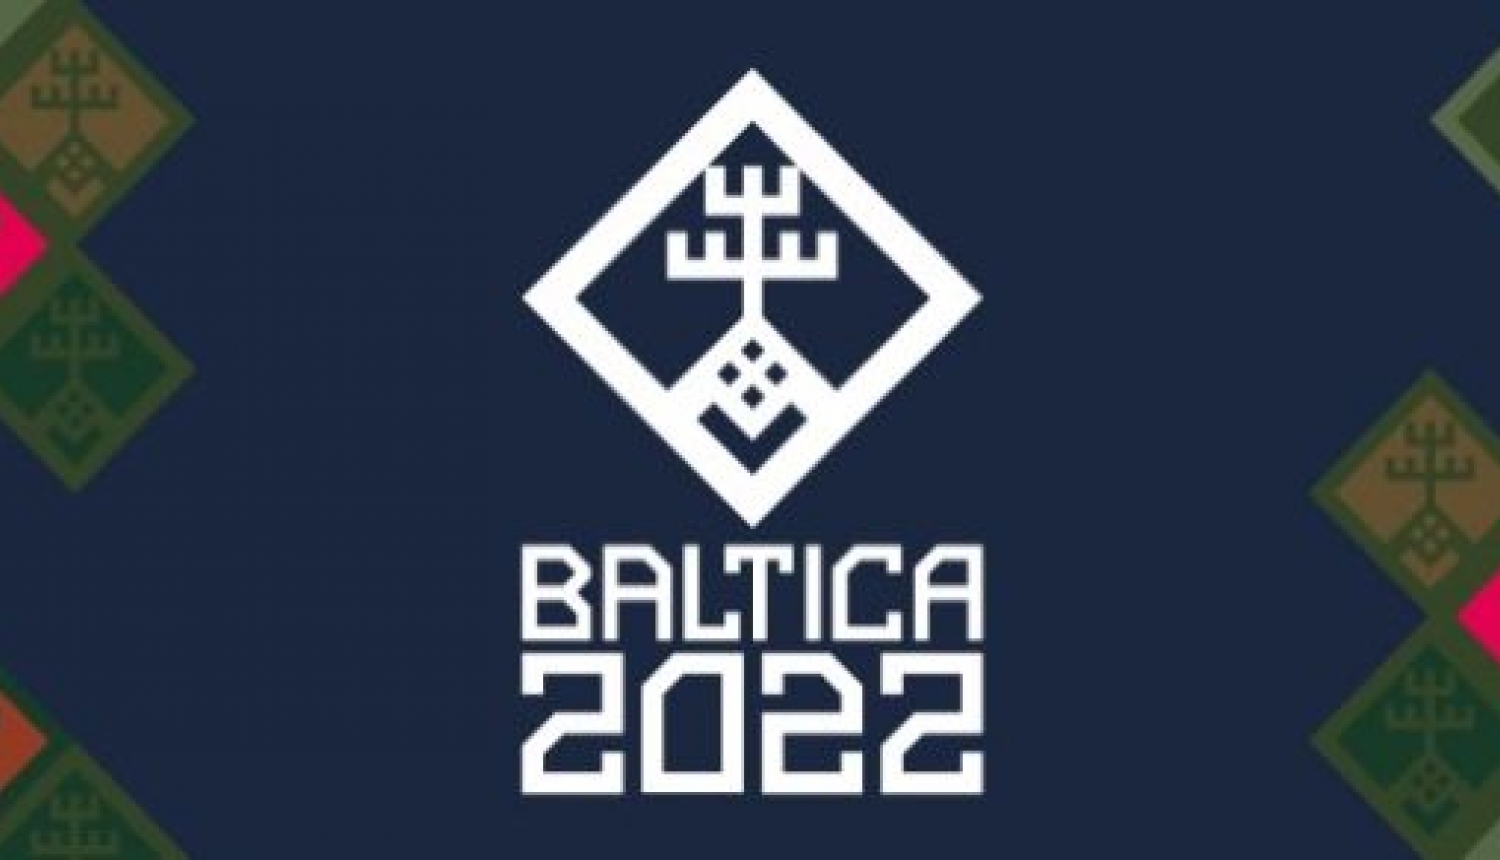 Folkloras festivāls Baltica 2022